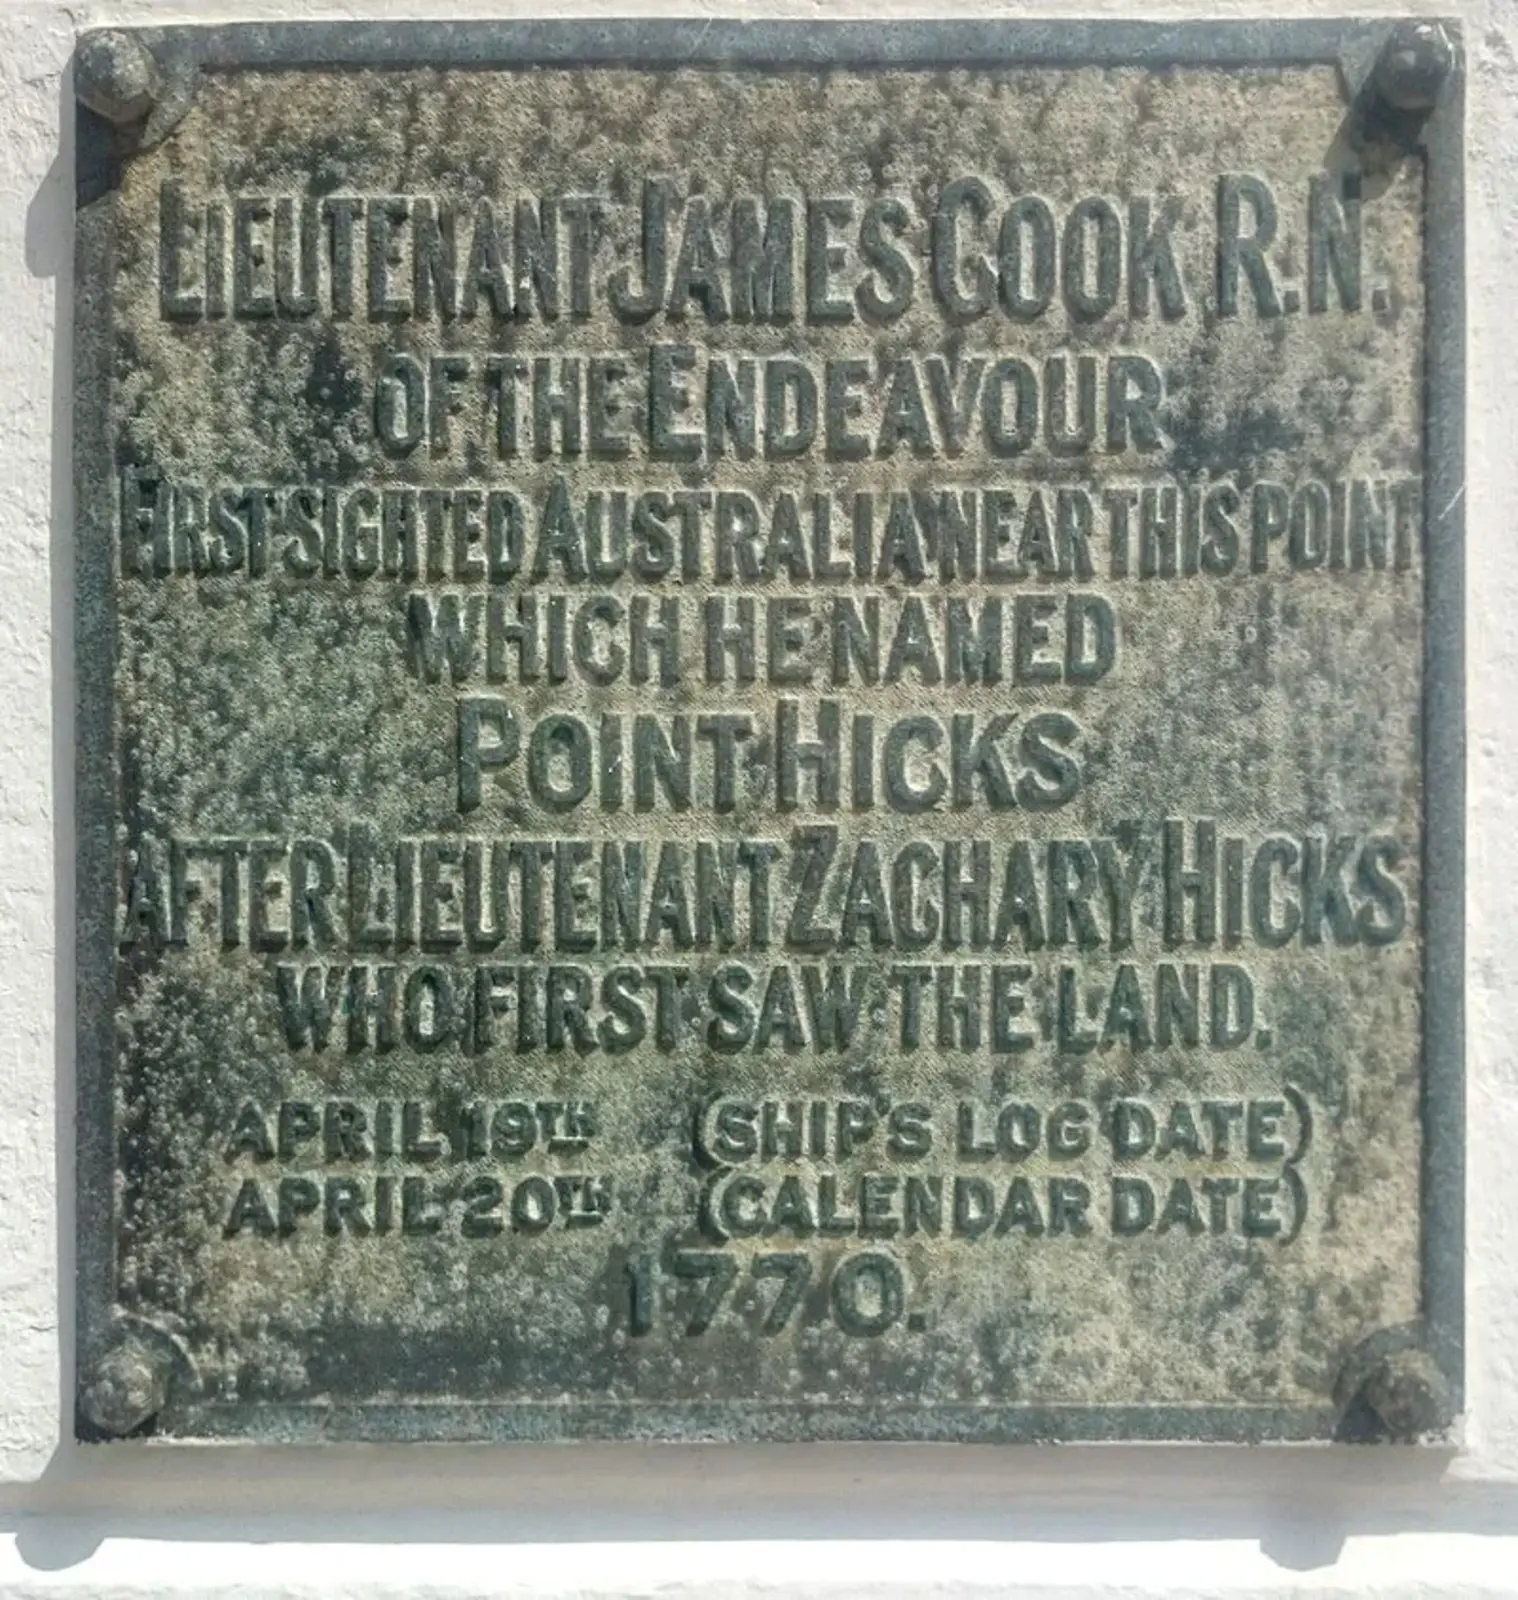 Point Hicks commemorative placque